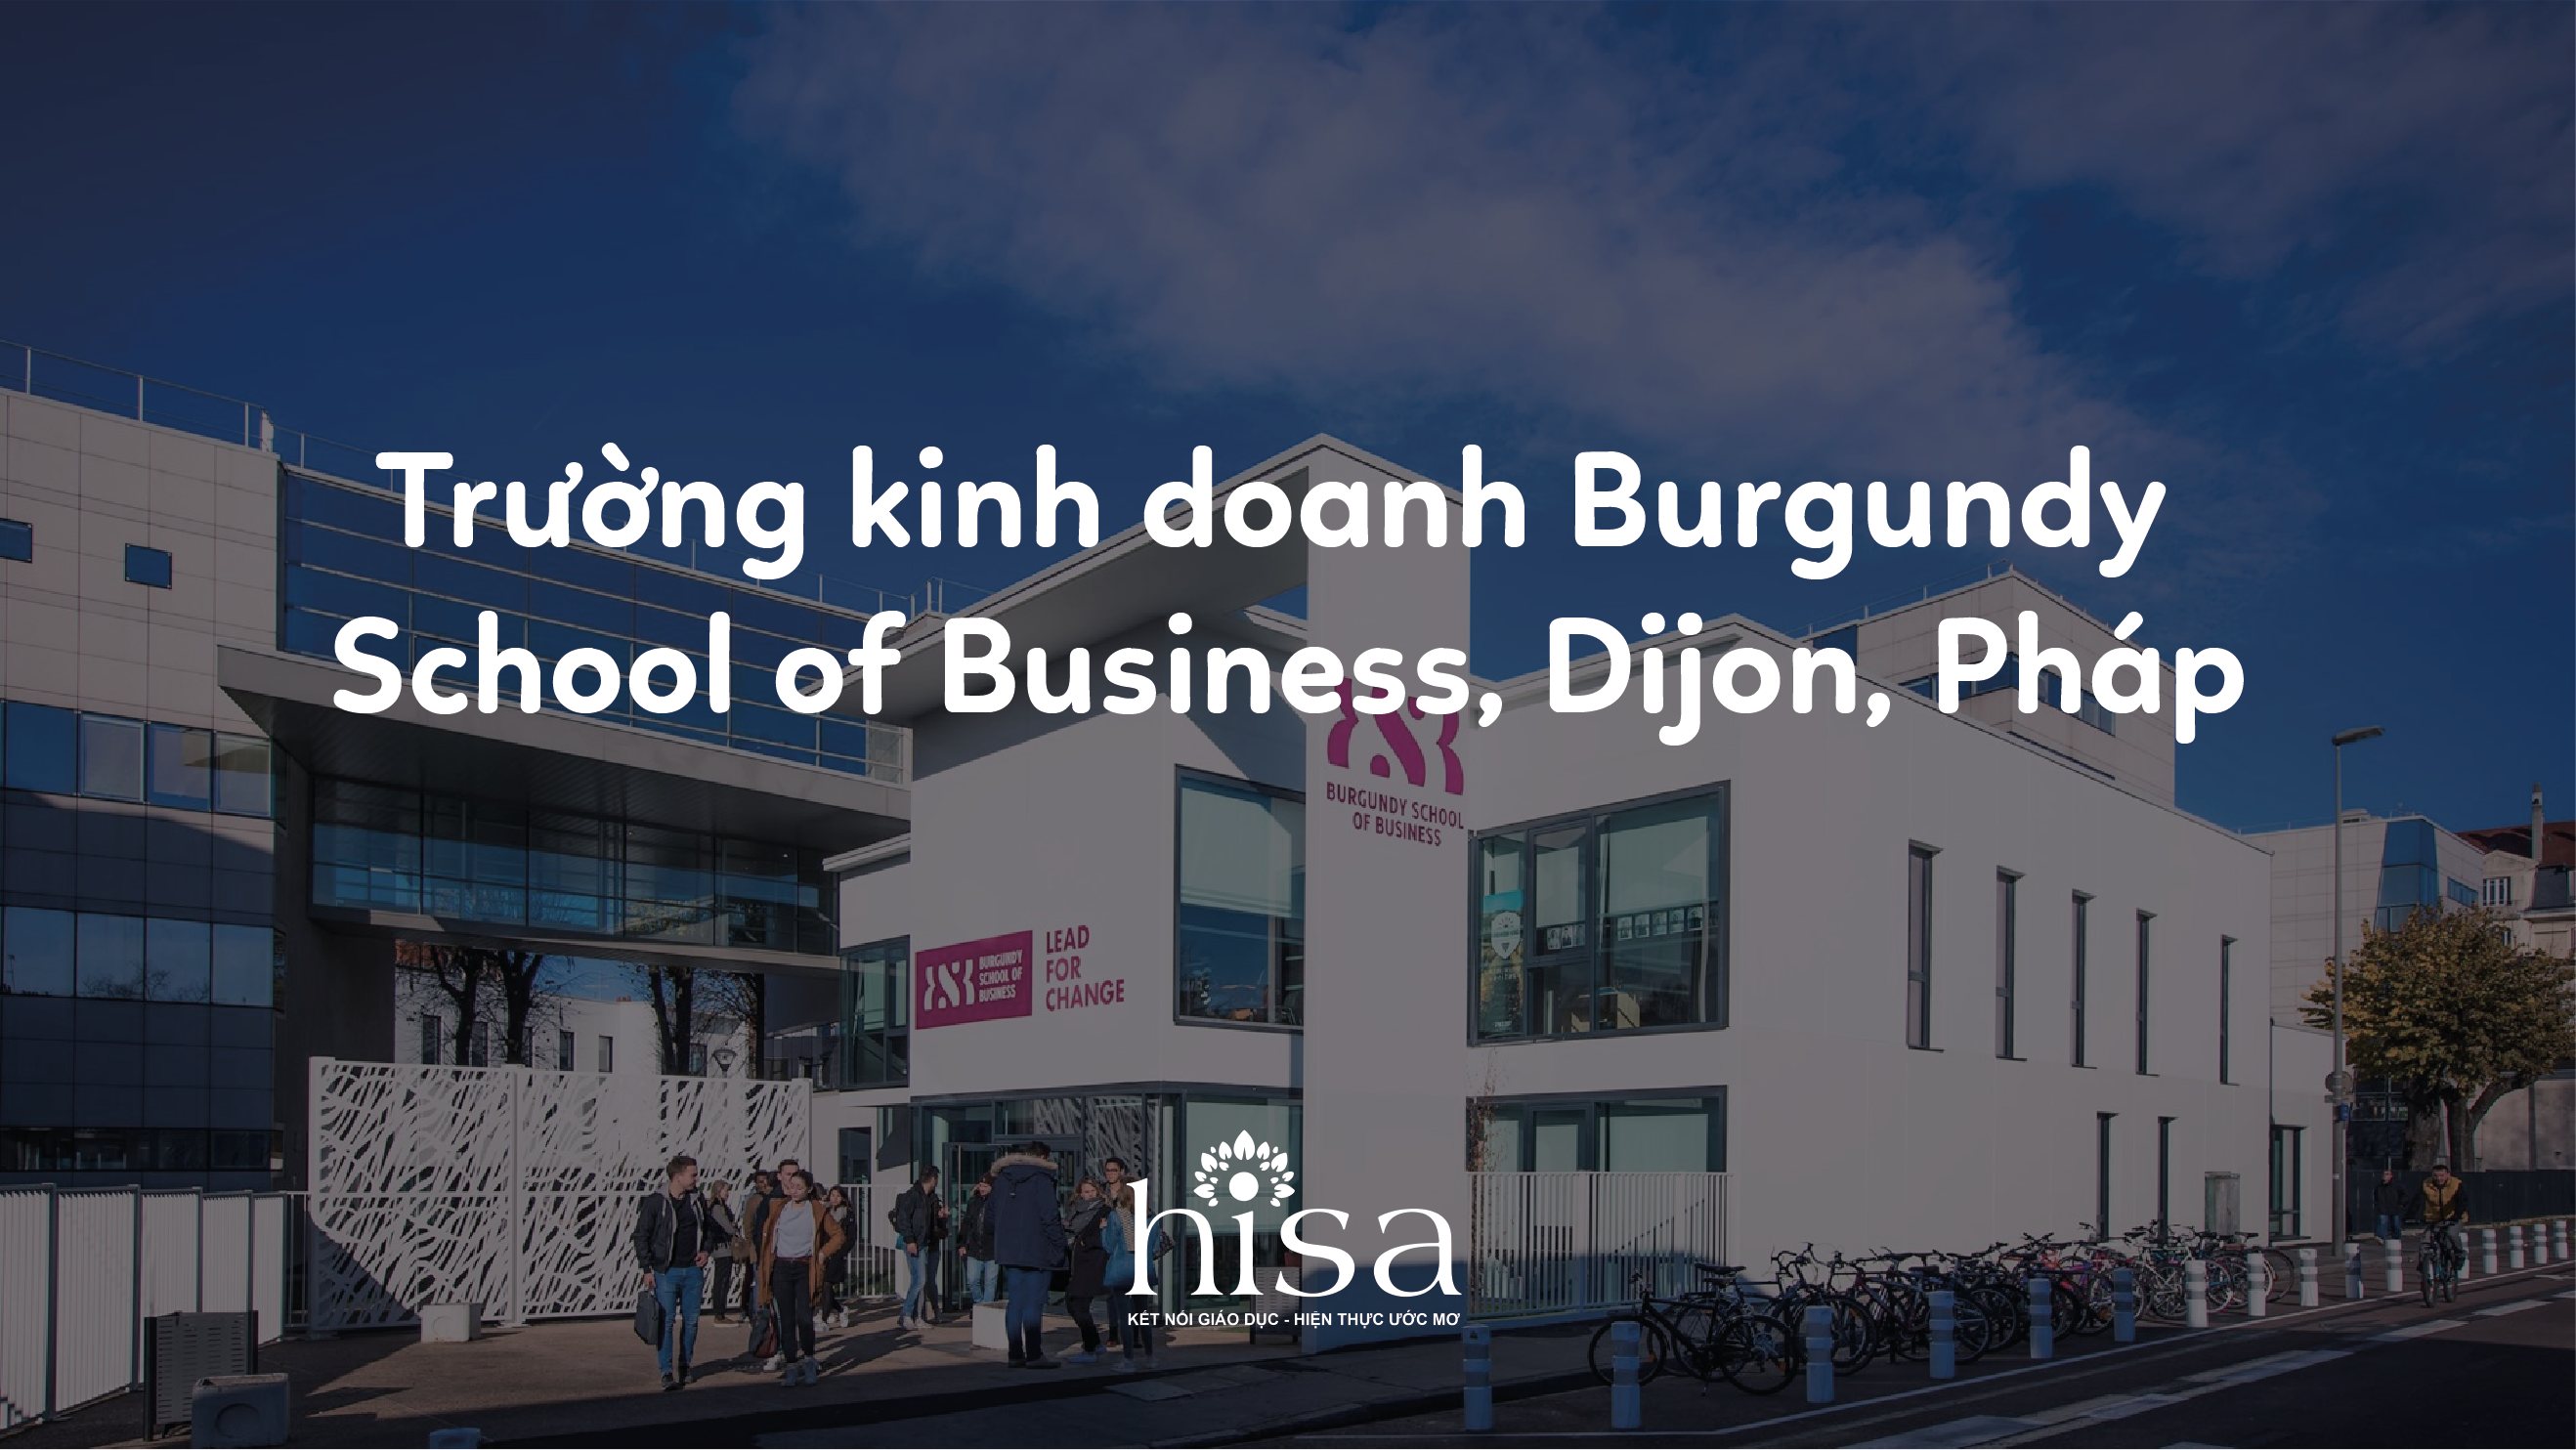 Burgundy School of Business, Dijon, Pháp